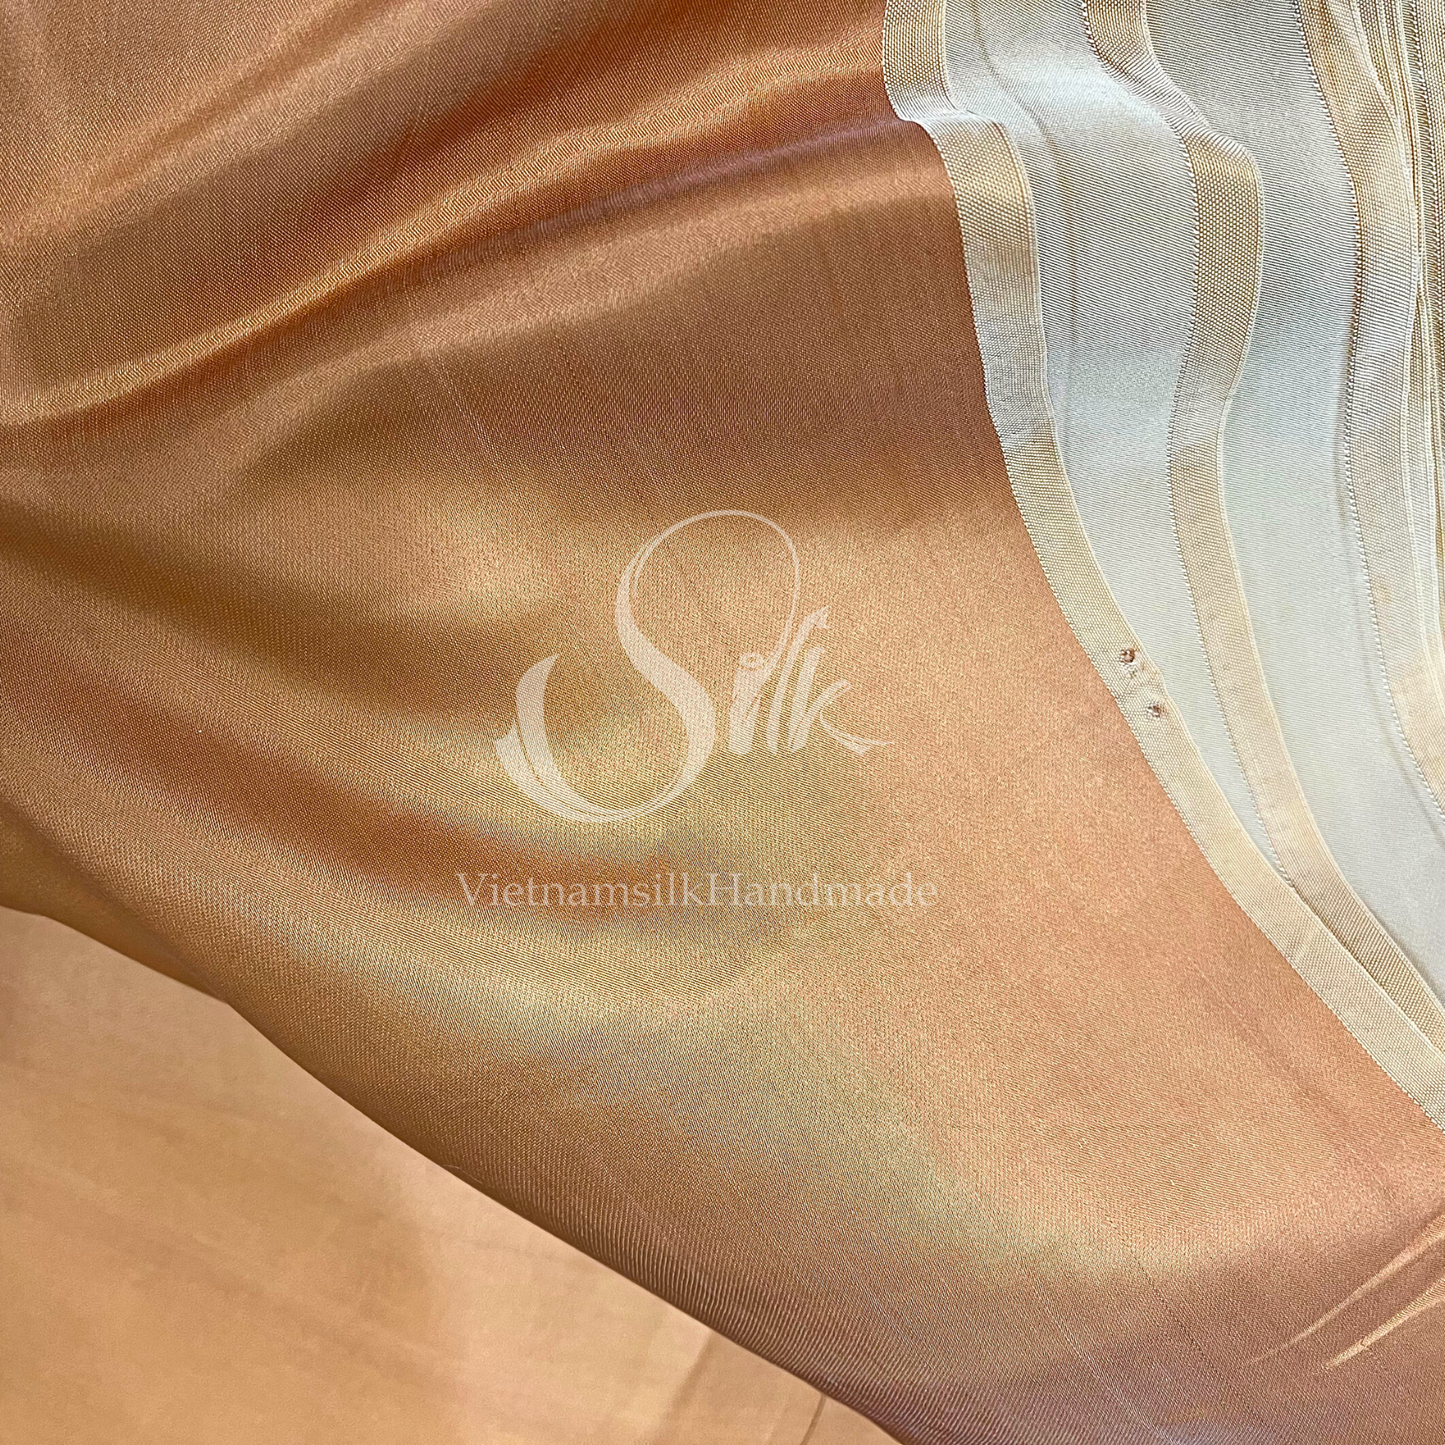 Orange Bronze Silk fabric by the yard - Natural silk - Pure Mulberry Silk - Handmade in VietNam